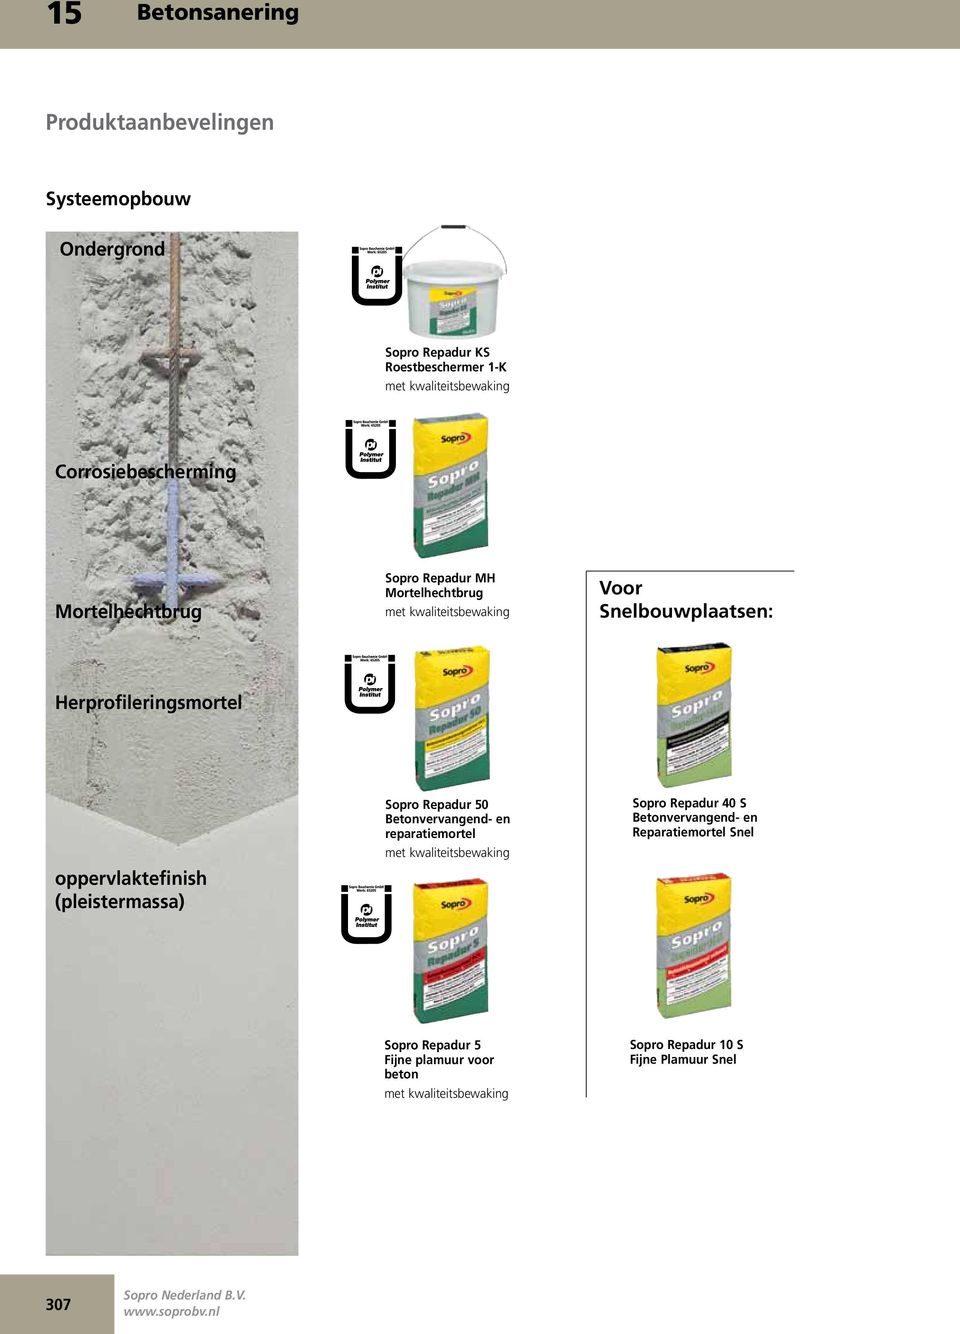 Herprofileringsmortel oppervlaktefinish (pleistermassa) Sopro Repadur 50 Betonvervangend- en reparatiemortel met kwaliteitsbewaking